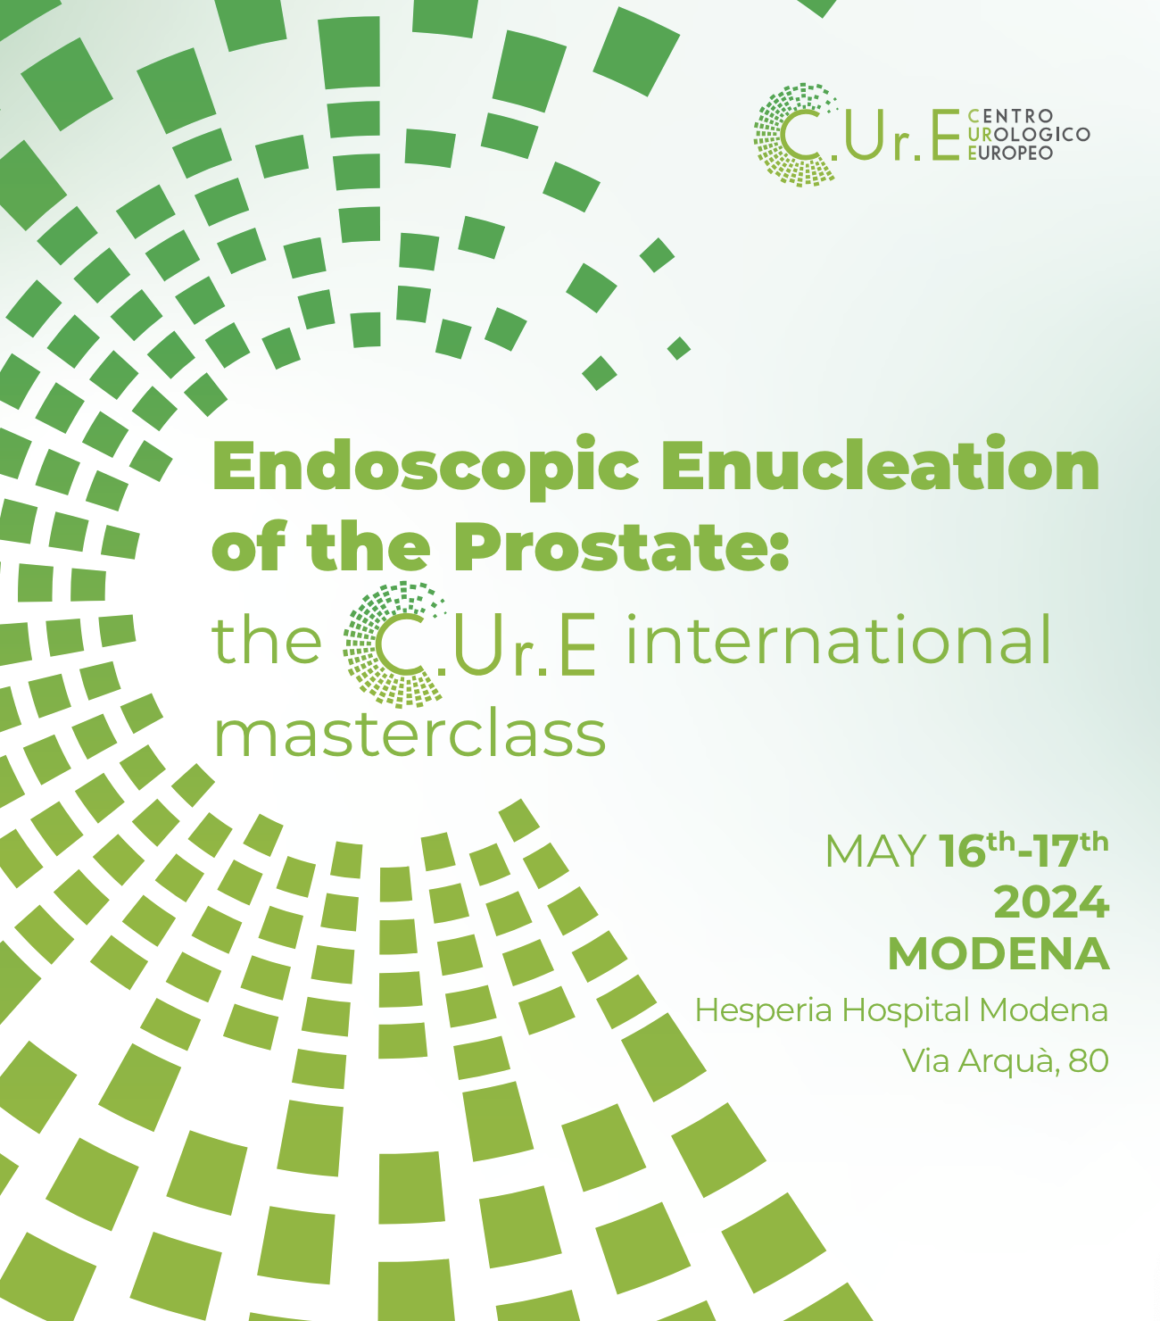 MAY 16th-17th 2024 MODENA – The C.Ur.E. international masterclass